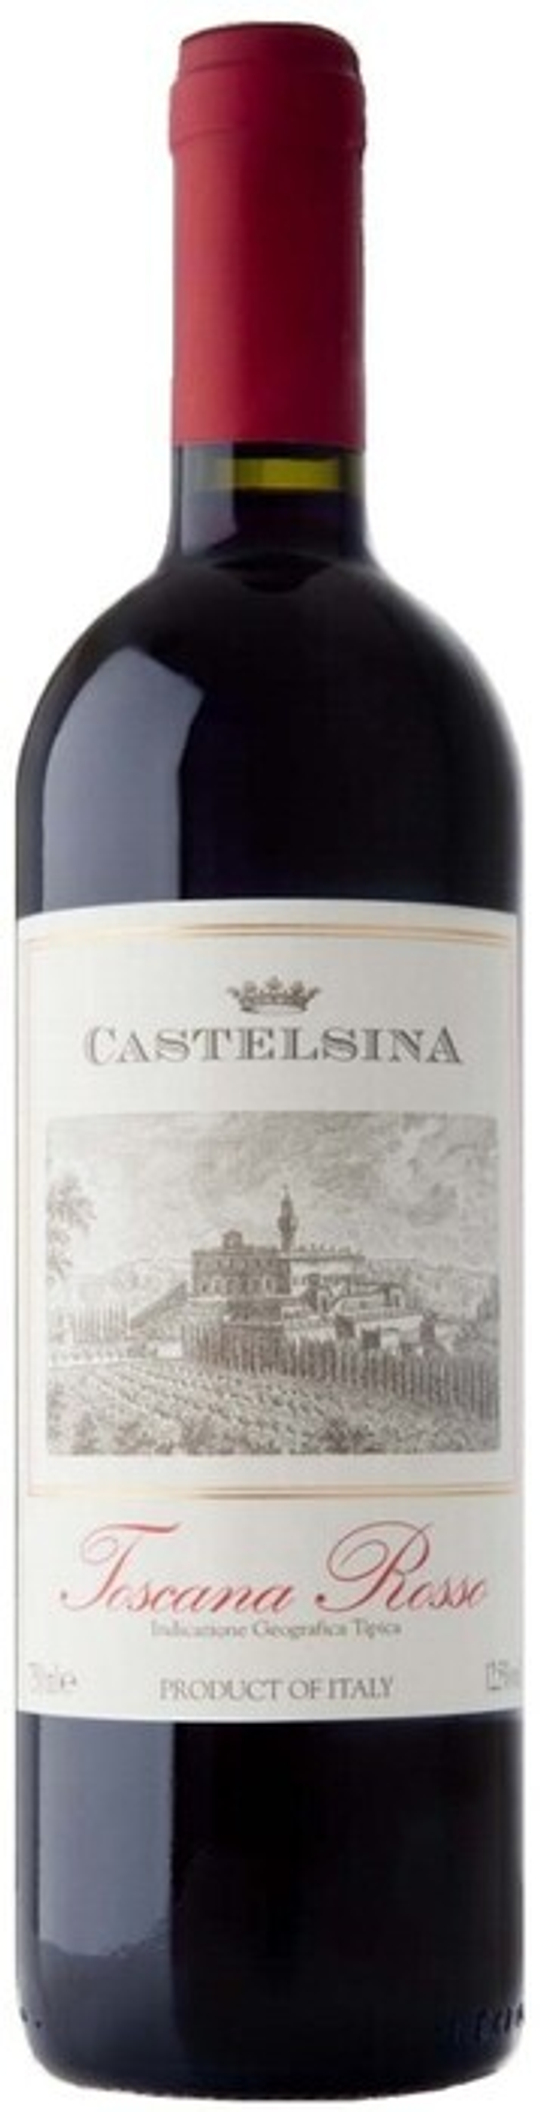 Вино Castelsina Toscana Rosso IGT, 0,75 л.